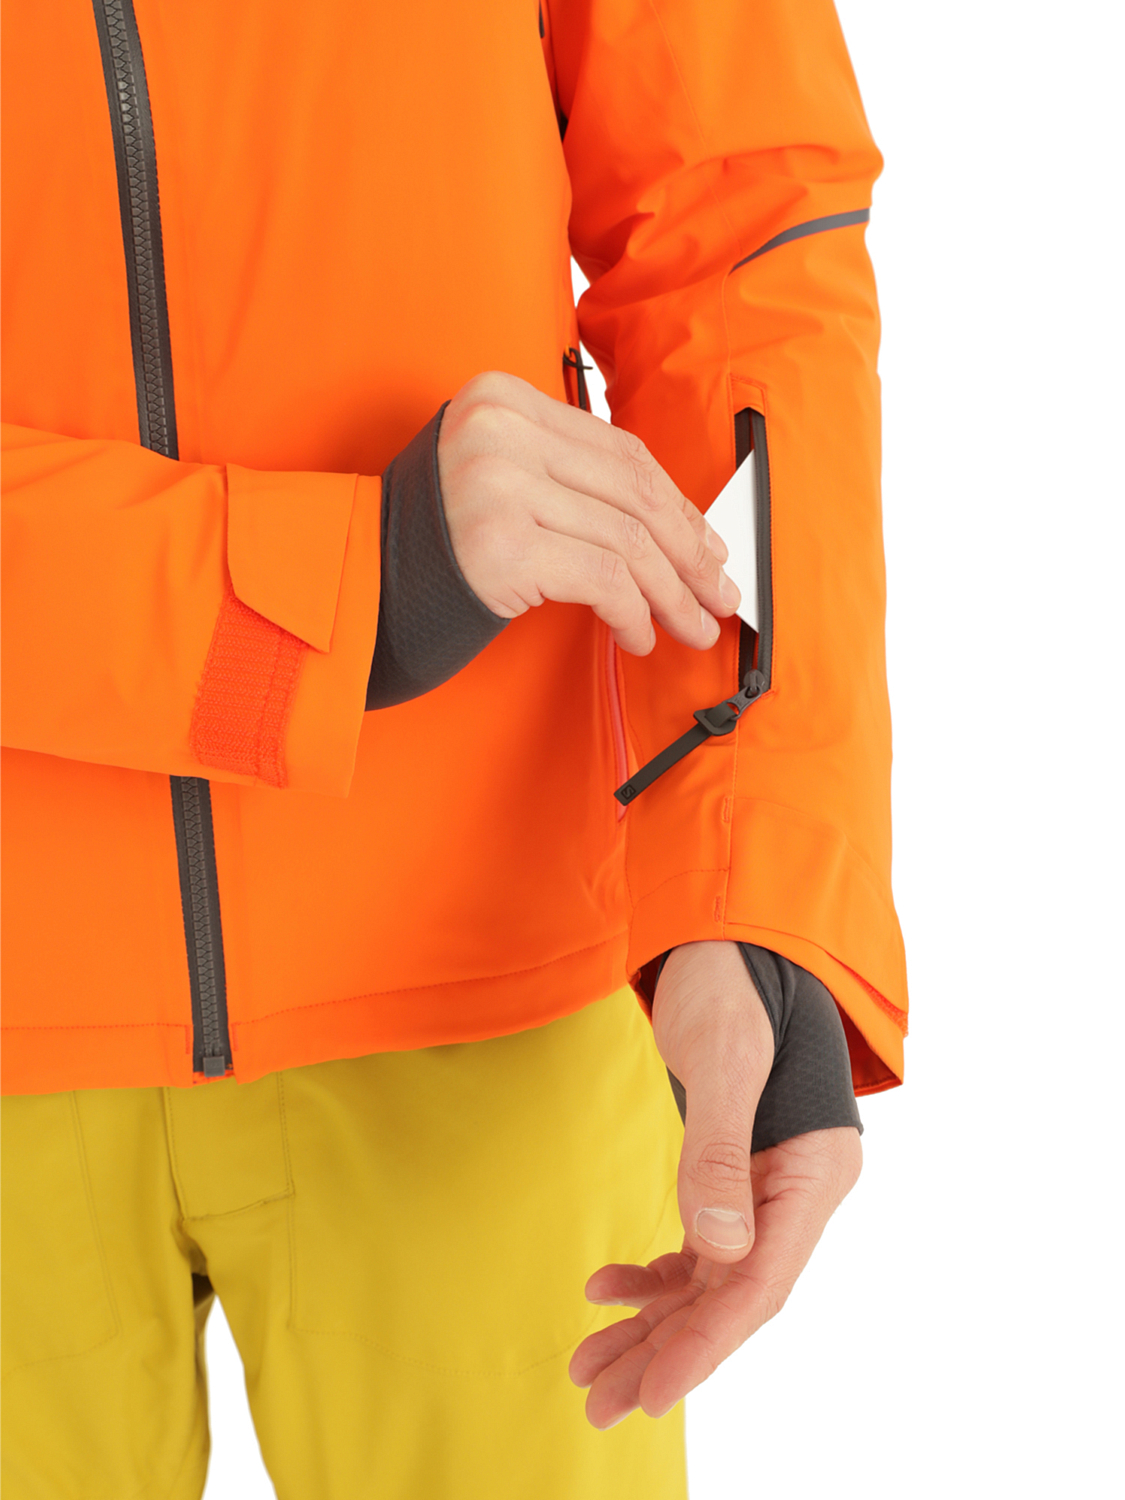 Куртка горнолыжная SALOMON Brilliant Jkt Men'S red Orange/Pureed